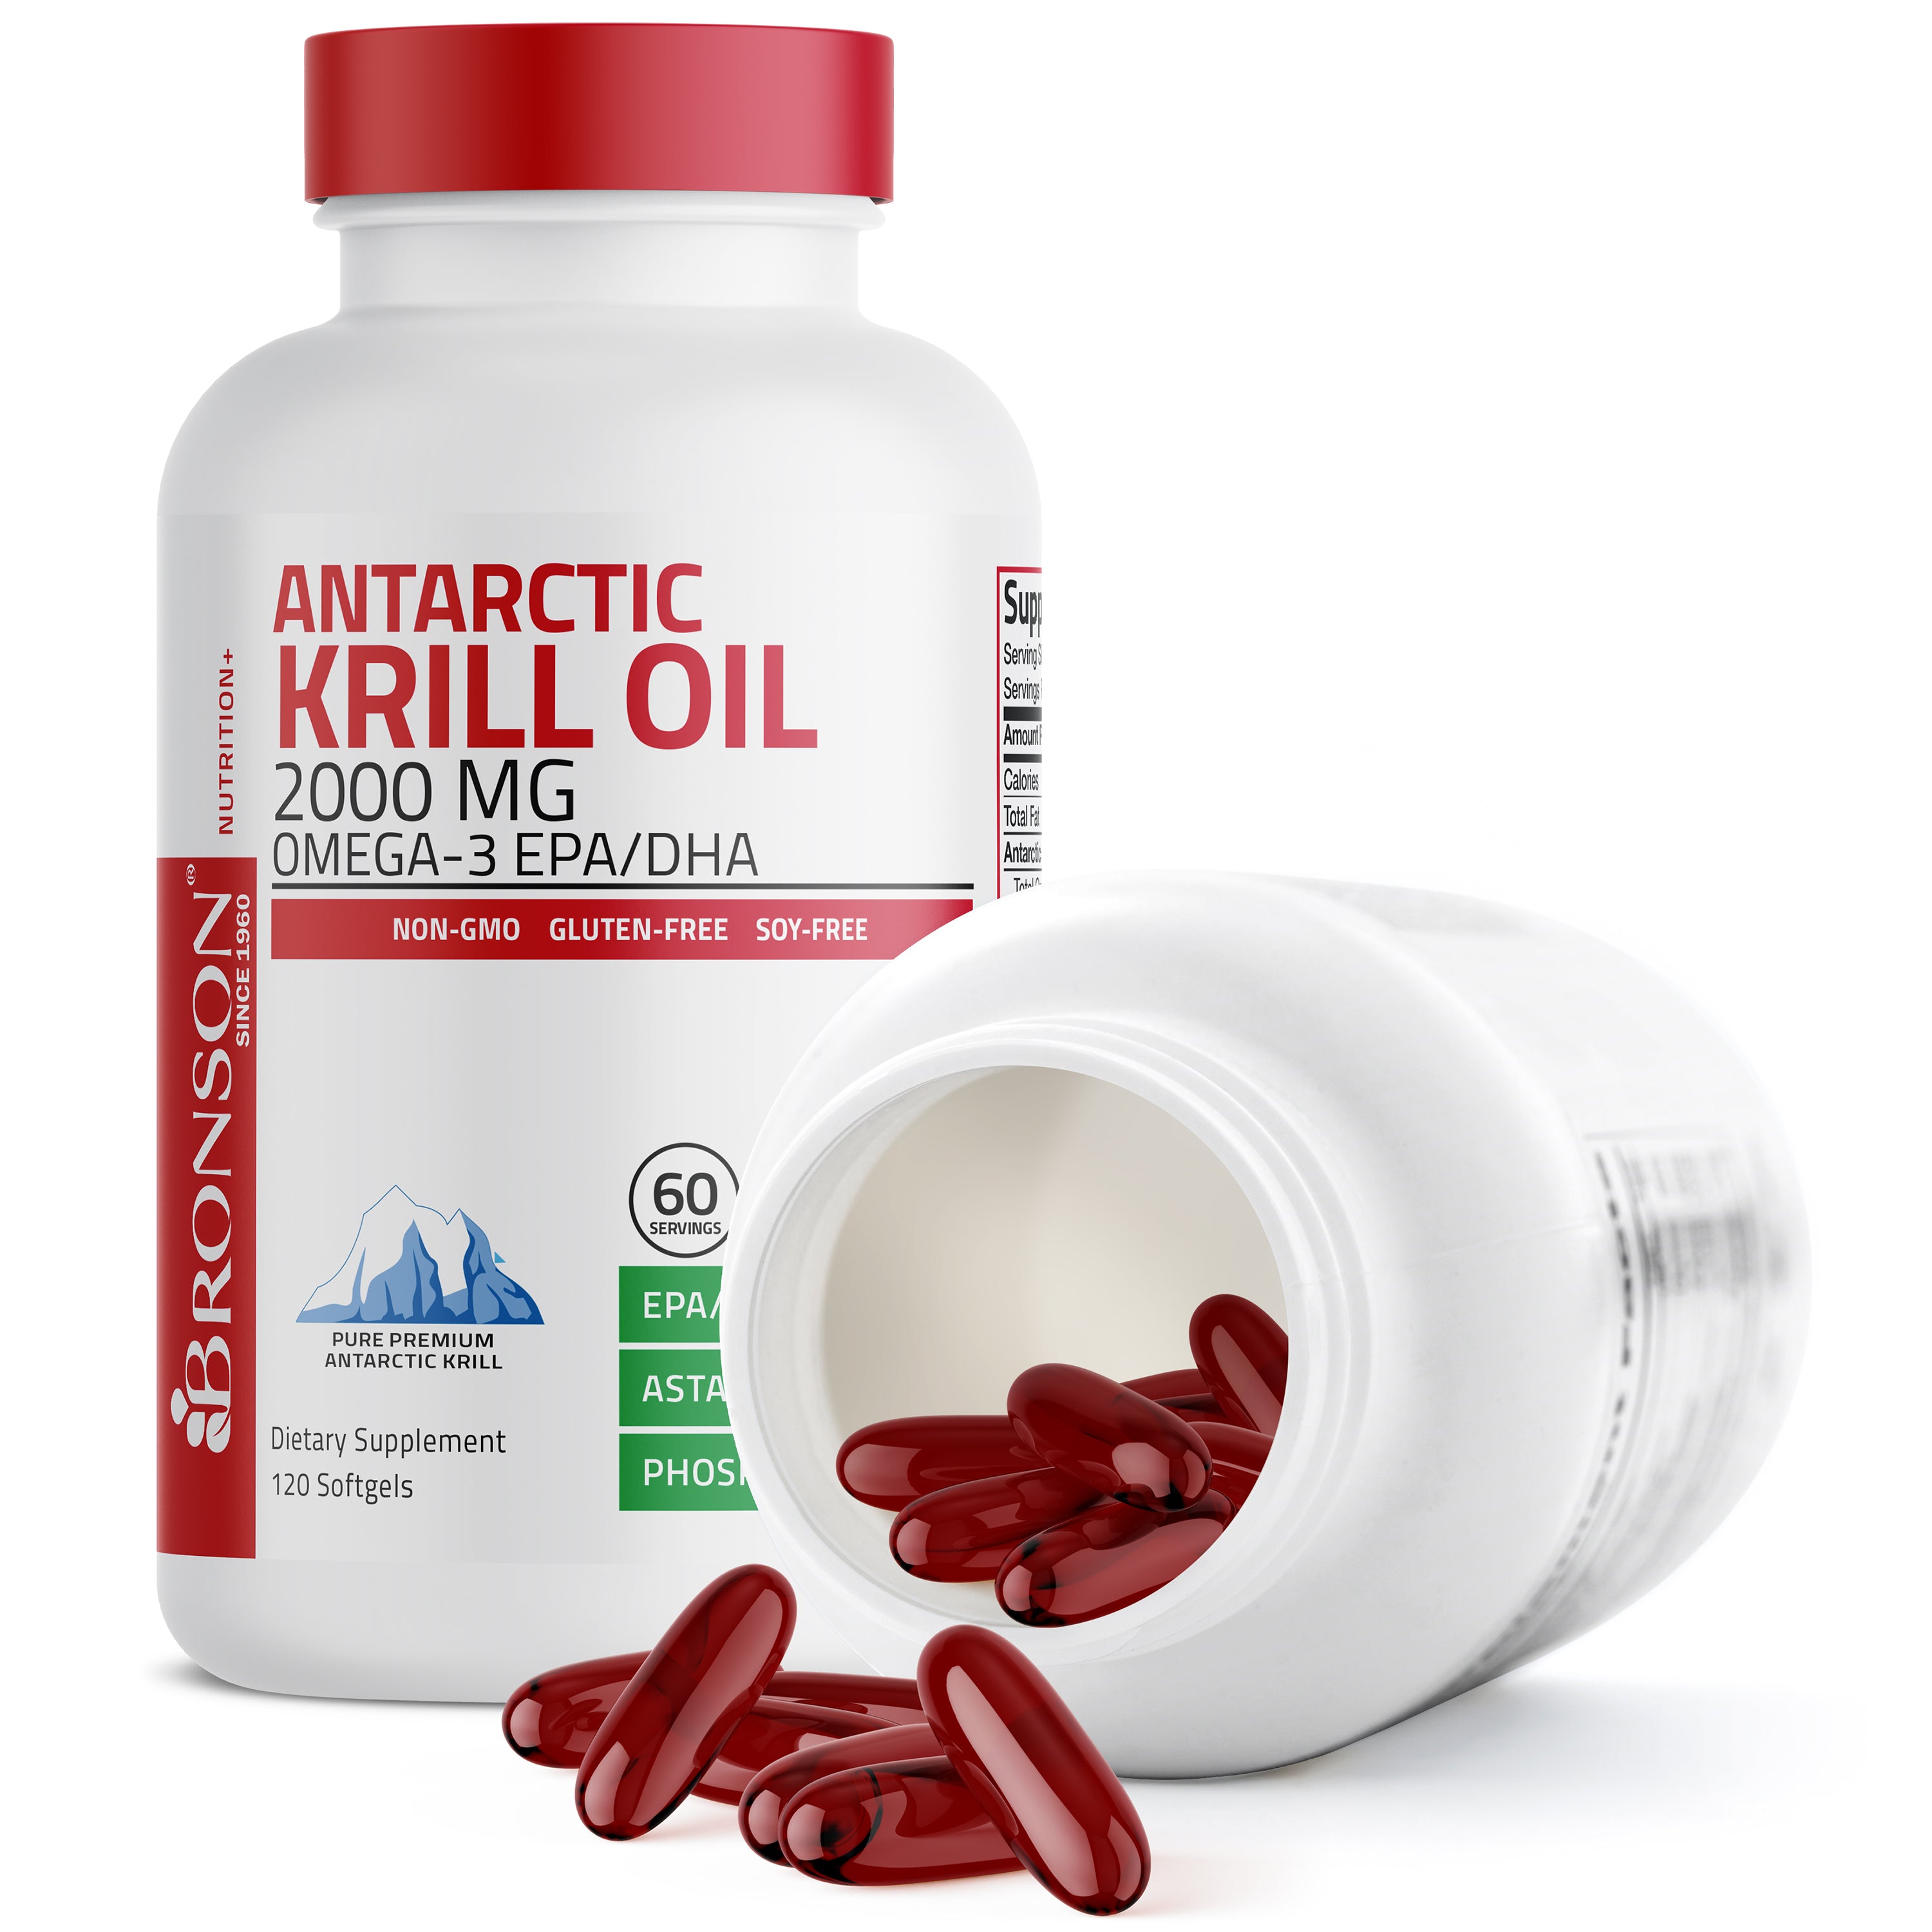 Antarctic Krill Oil Omega-3 EPA DHA Non-GMO - 2,000 mg view 5 of 6